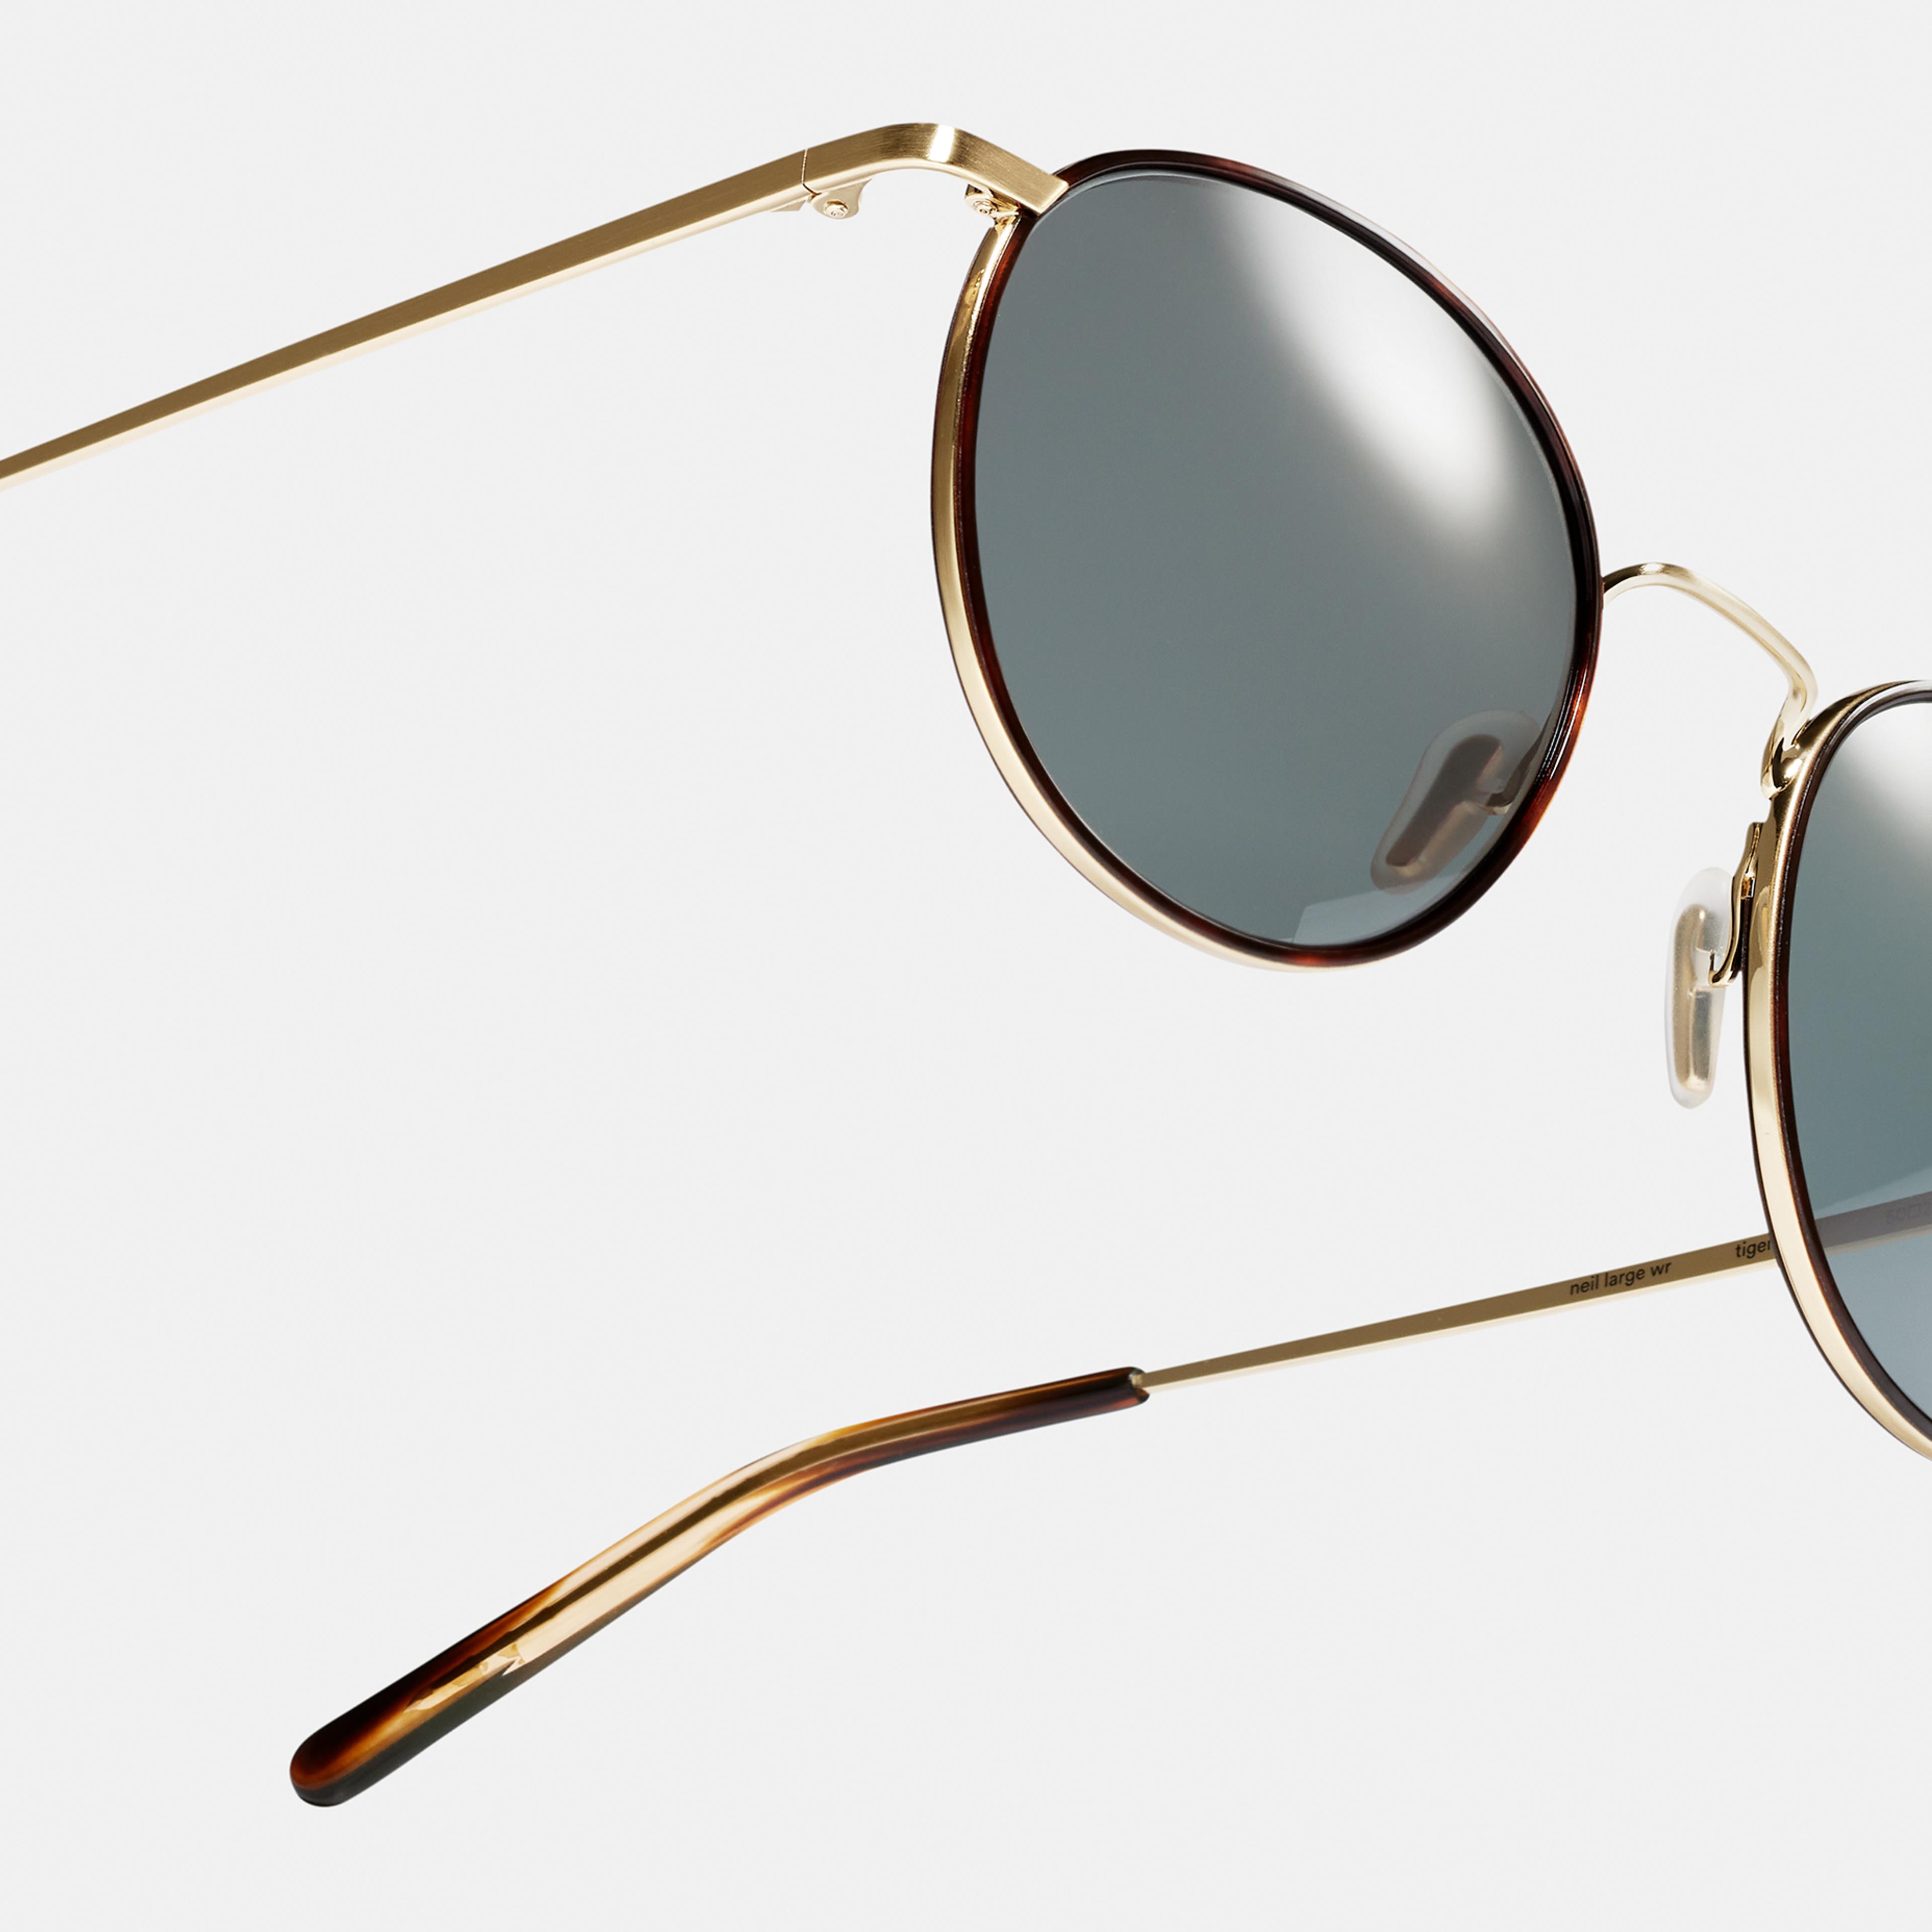 Ace & Tate Sunglasses | Round Metal in Brown, Gold, Orange